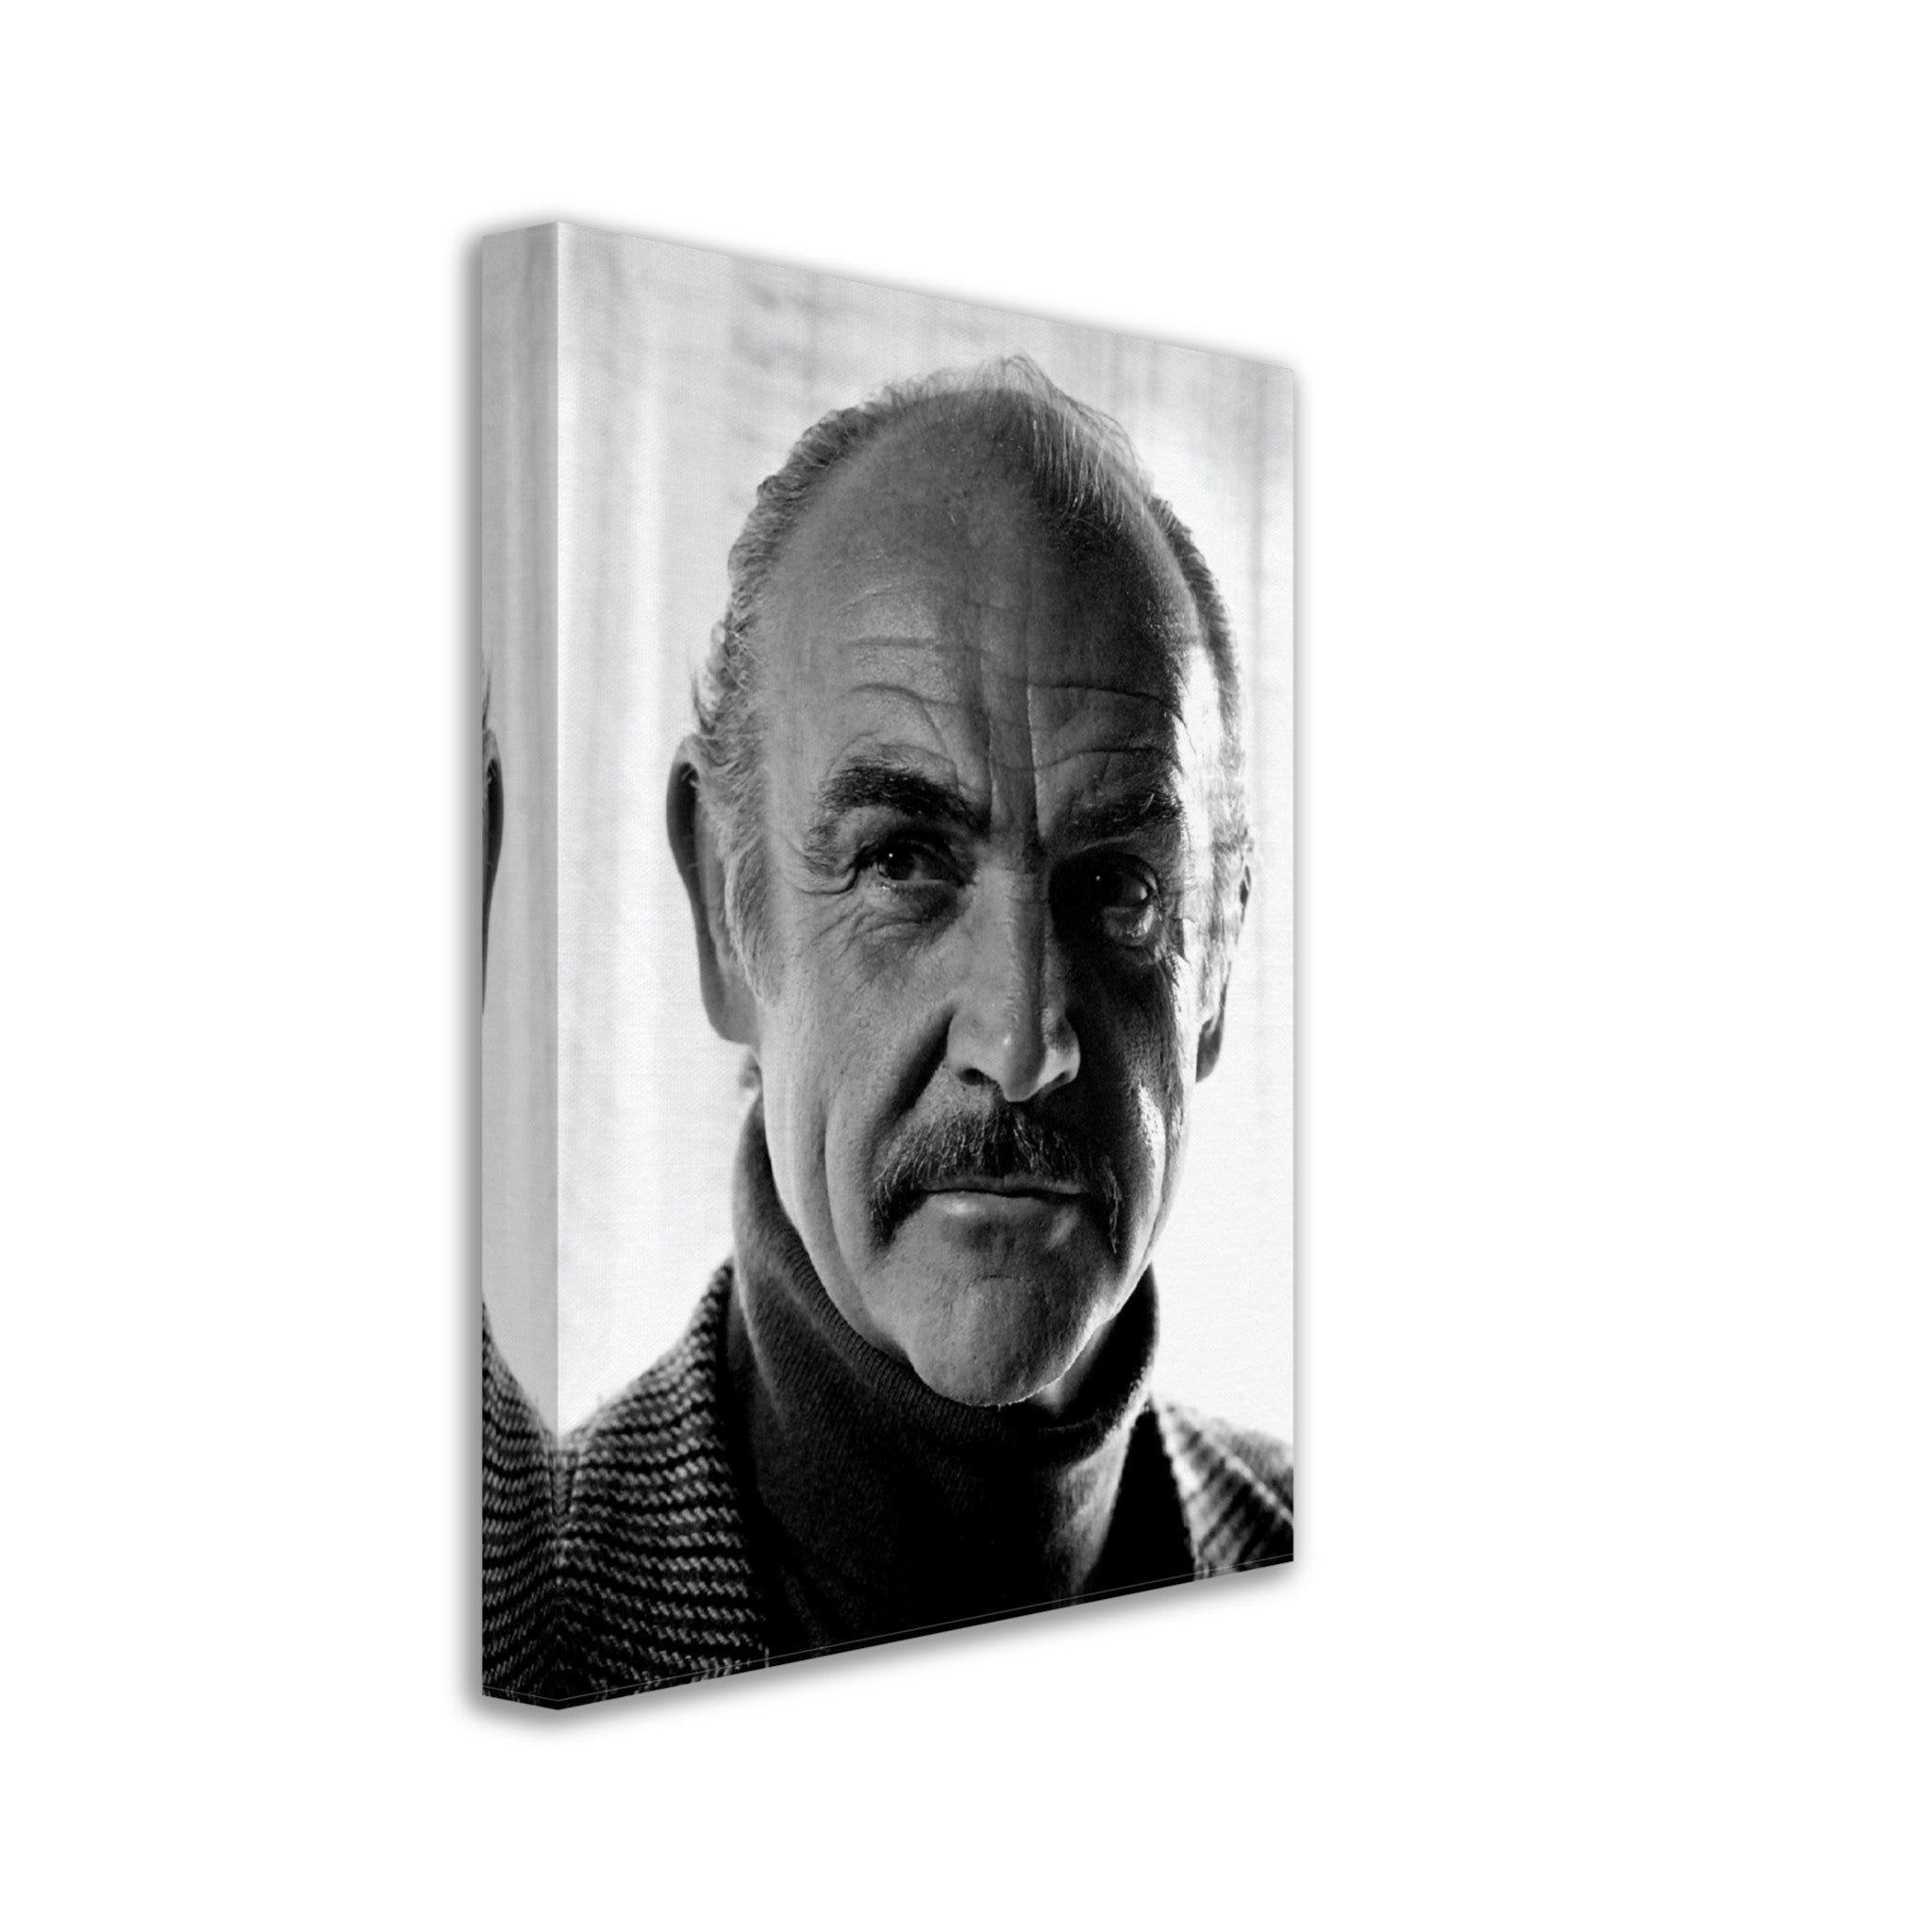 Sean Connery Canvas, Vintage Photo Portrait - Sean Connery Canvas Print 1983 - WallArtPrints4U